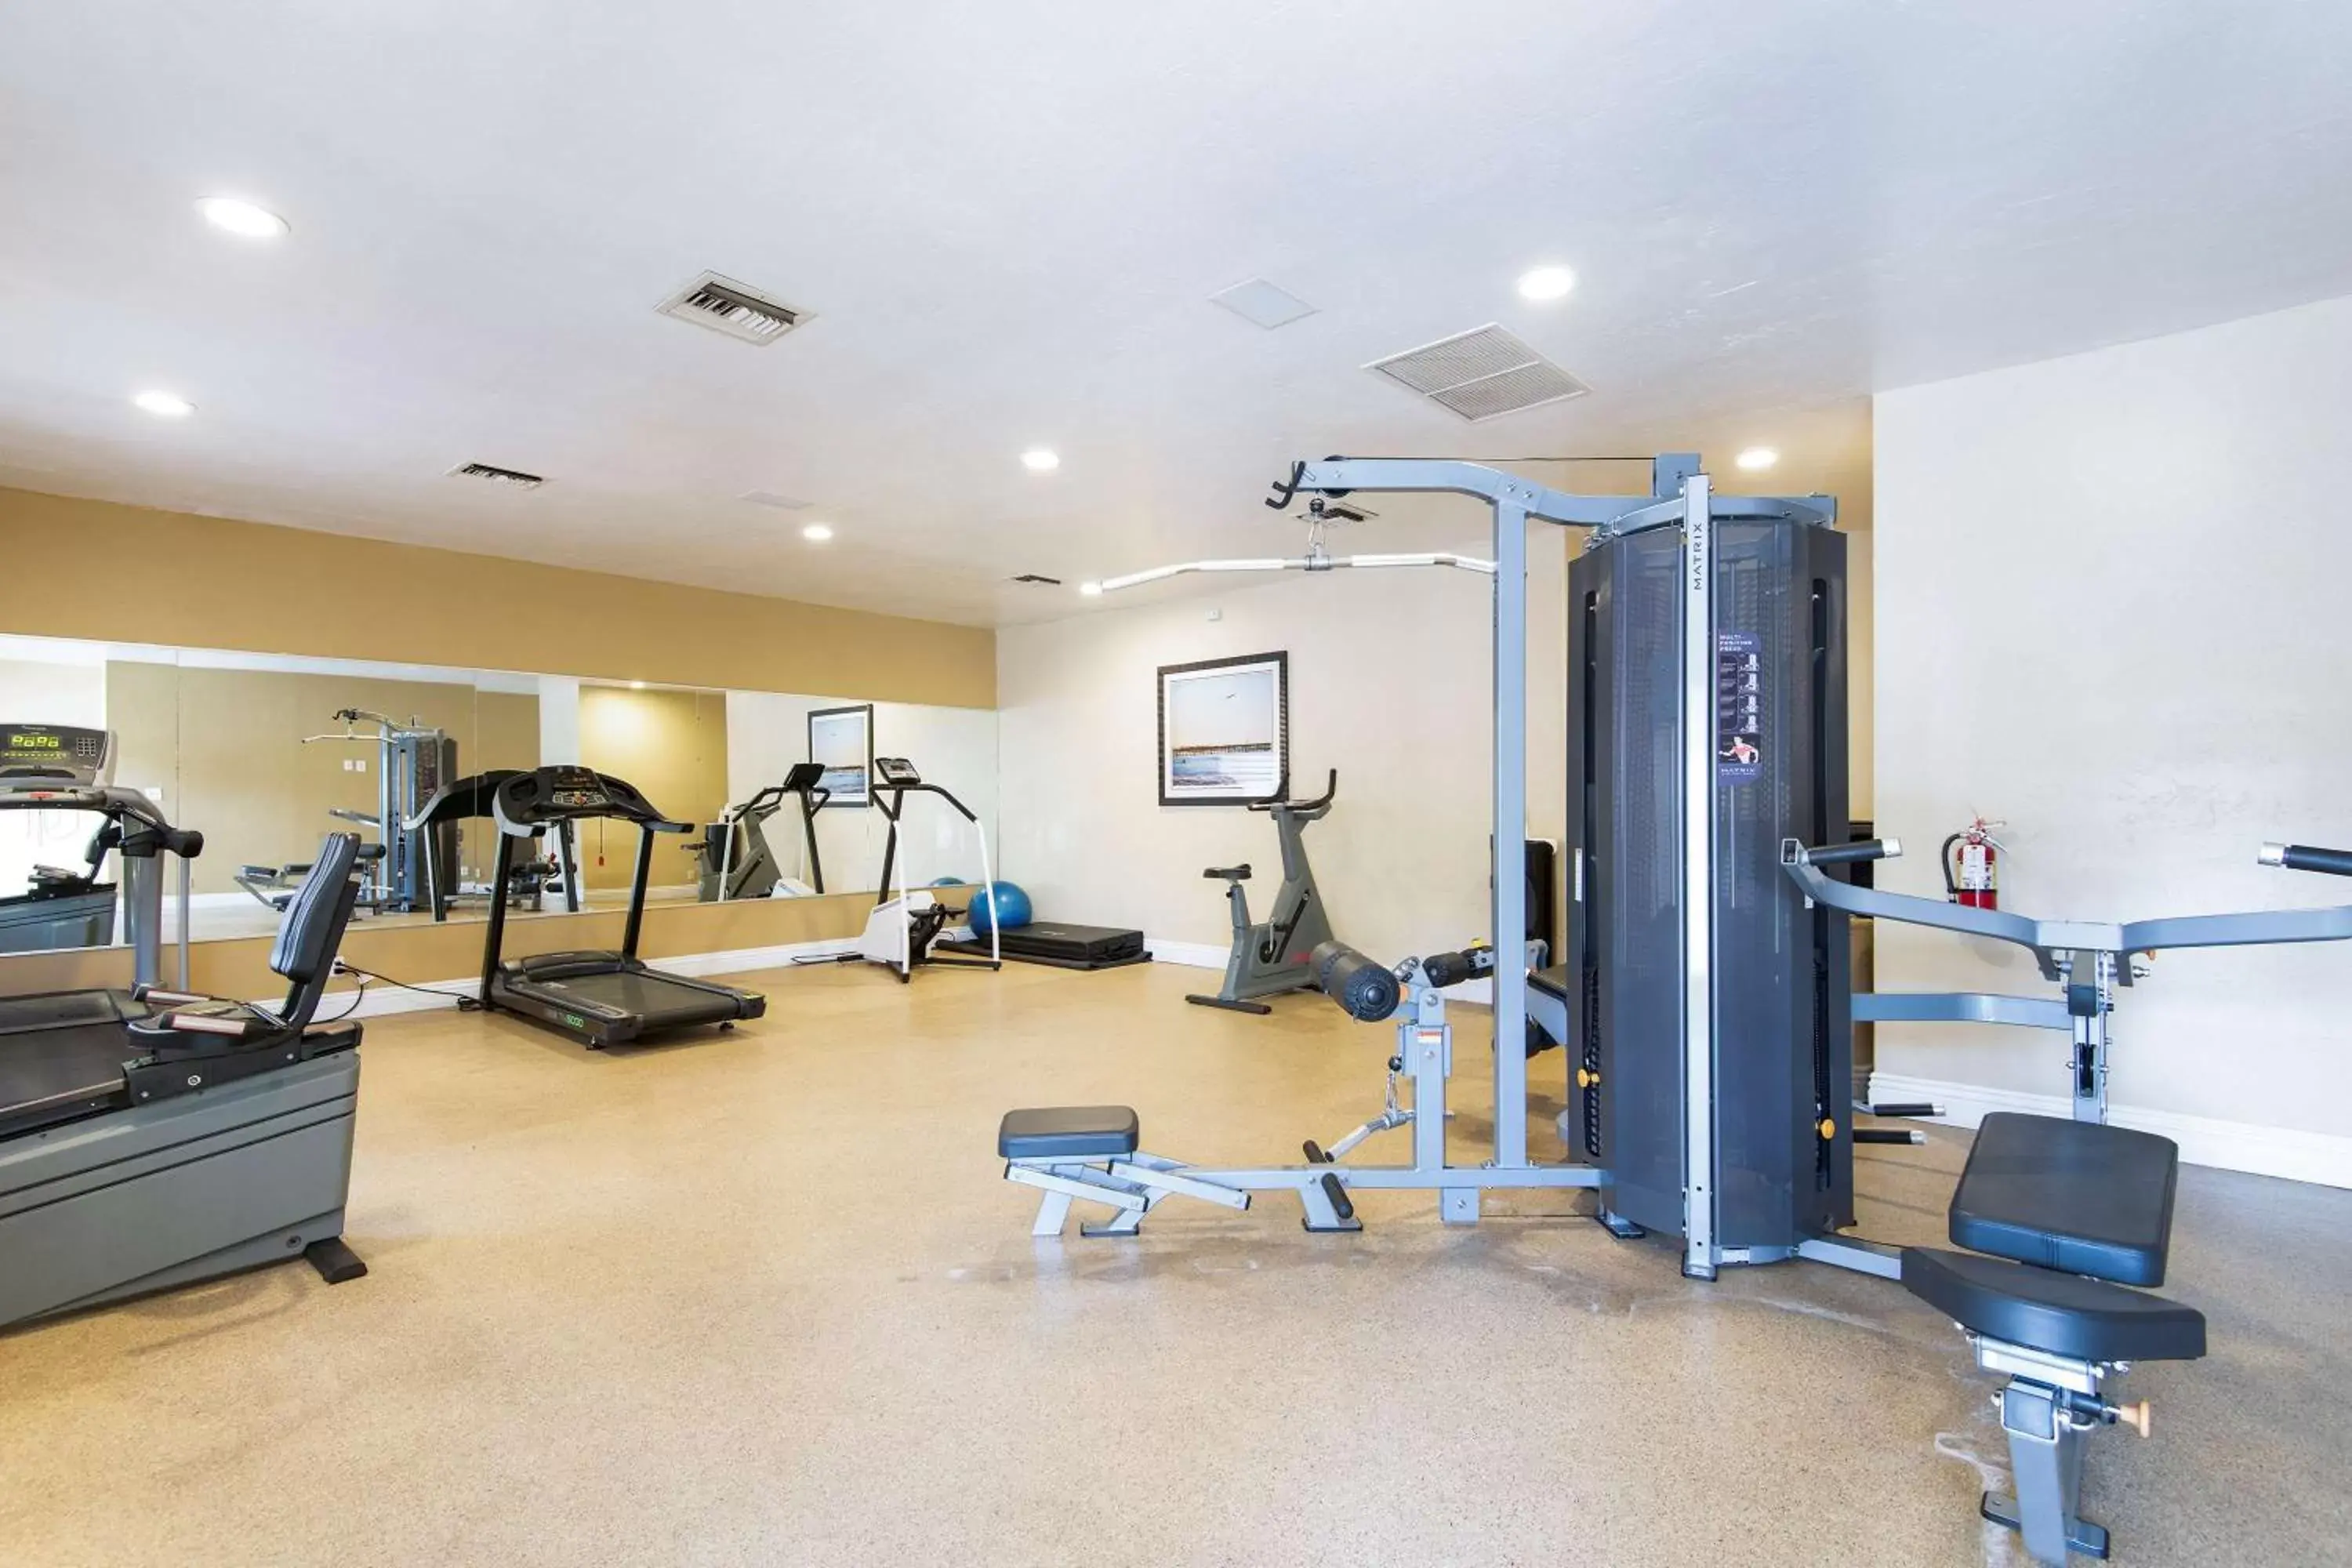 Fitness centre/facilities, Fitness Center/Facilities in Best Western Oceanside Inn